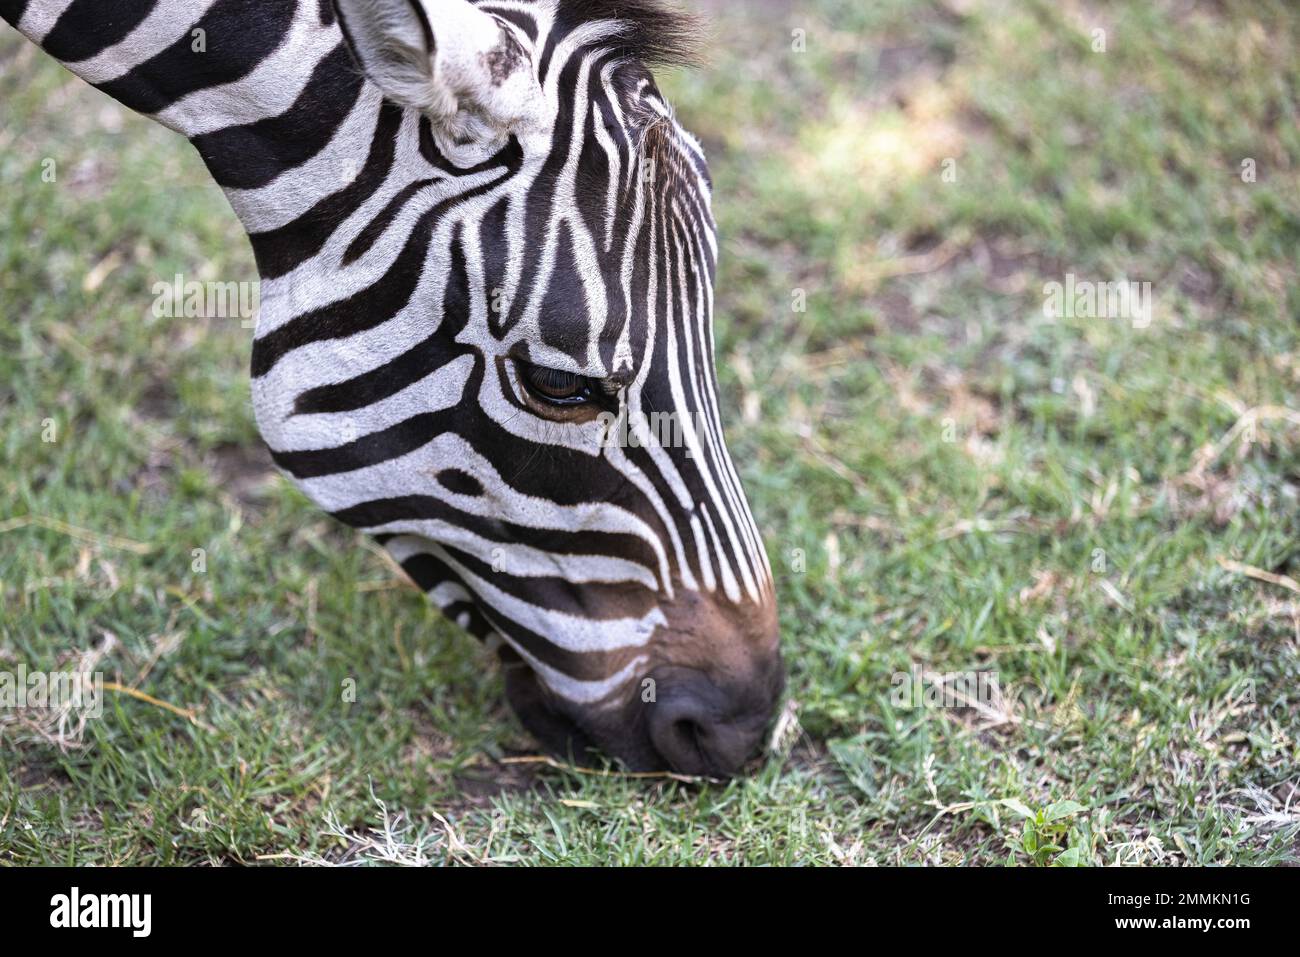 Zebras eat grass Stock Photo